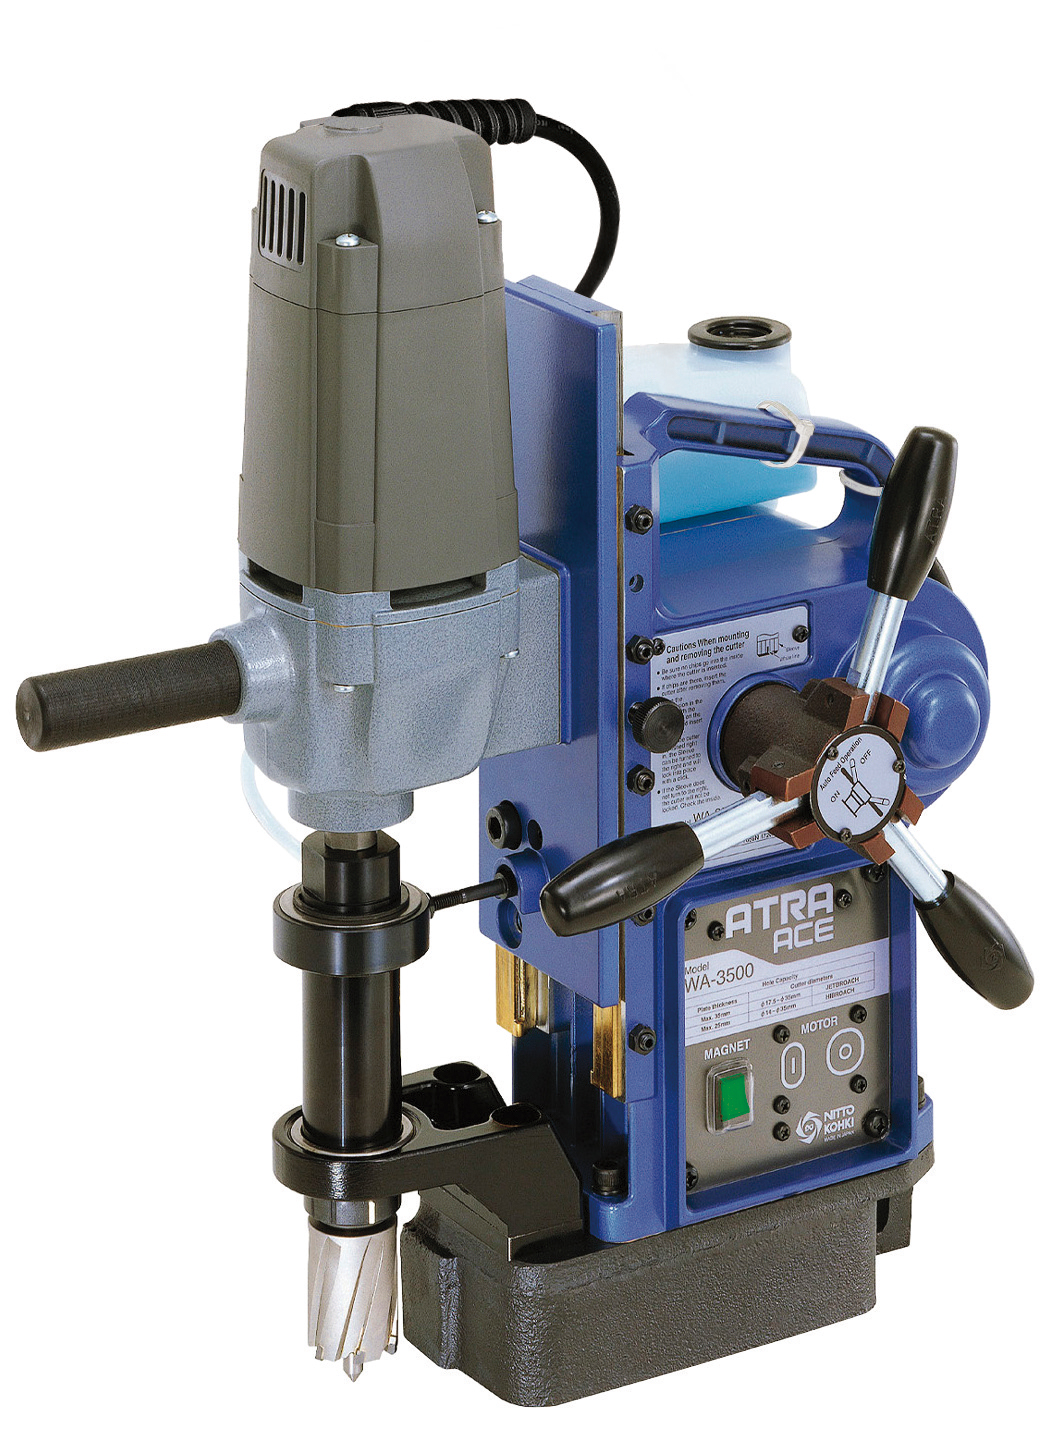 NITTO Portable Magnetic Base Drilling Machine WA-3500